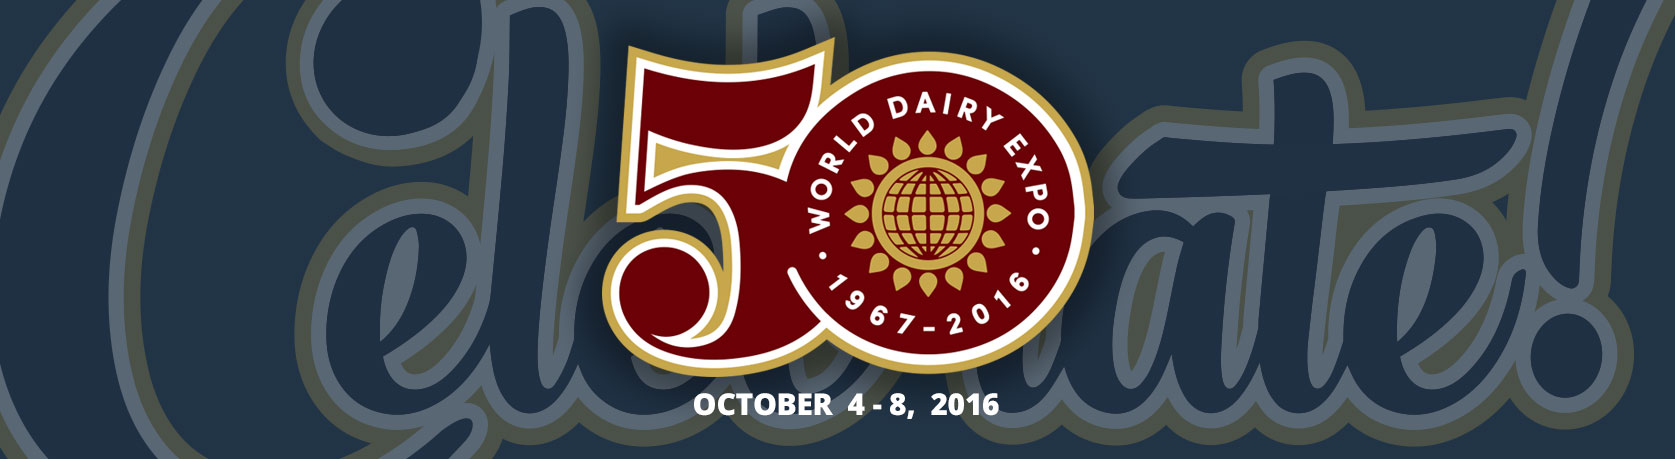 Celebrate 50 - World Dairy Expo - October 4 - 8